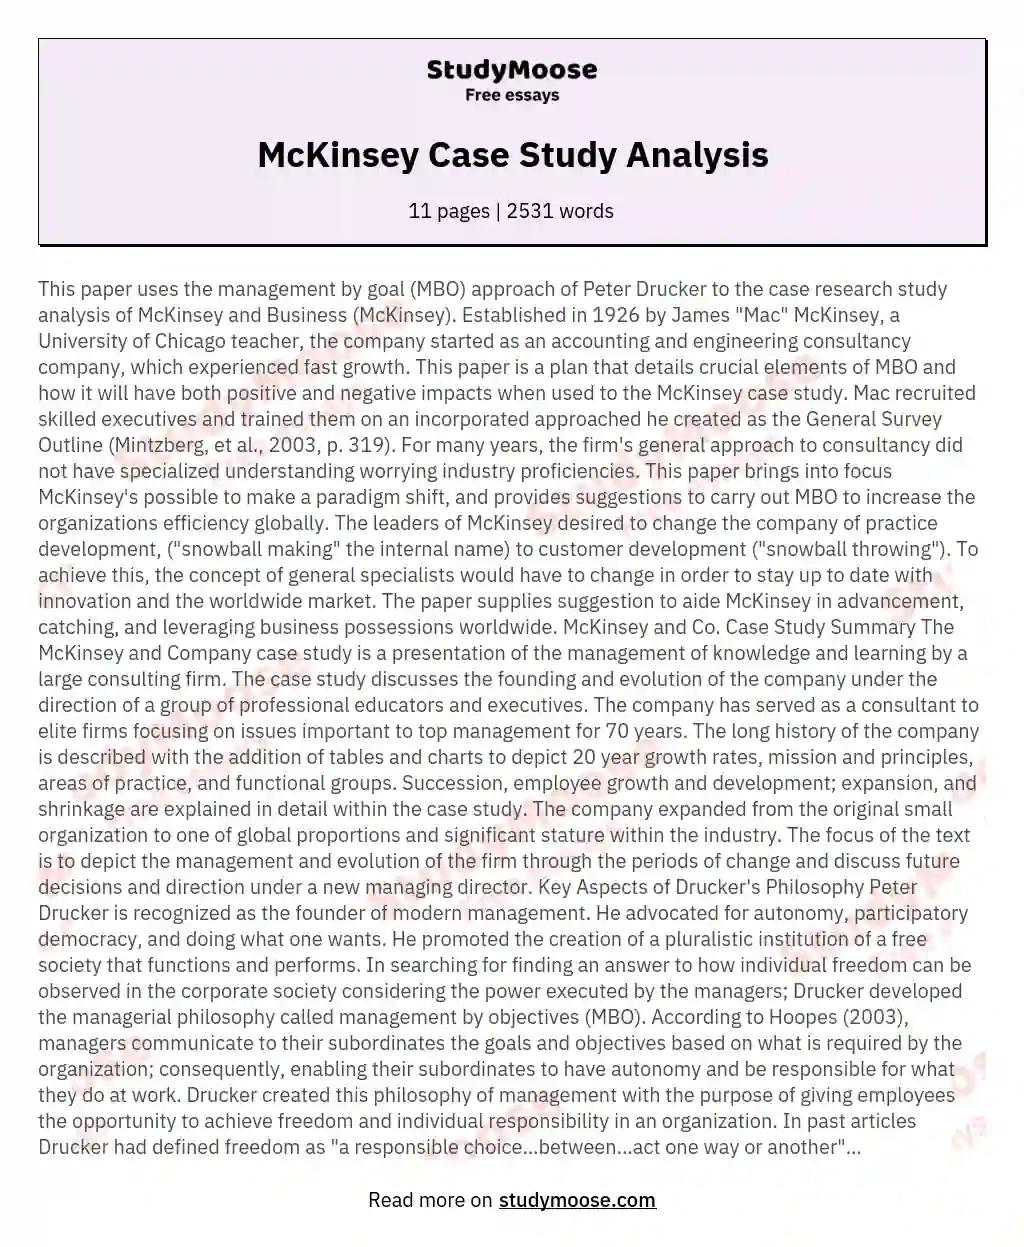 McKinsey Case Study Analysis